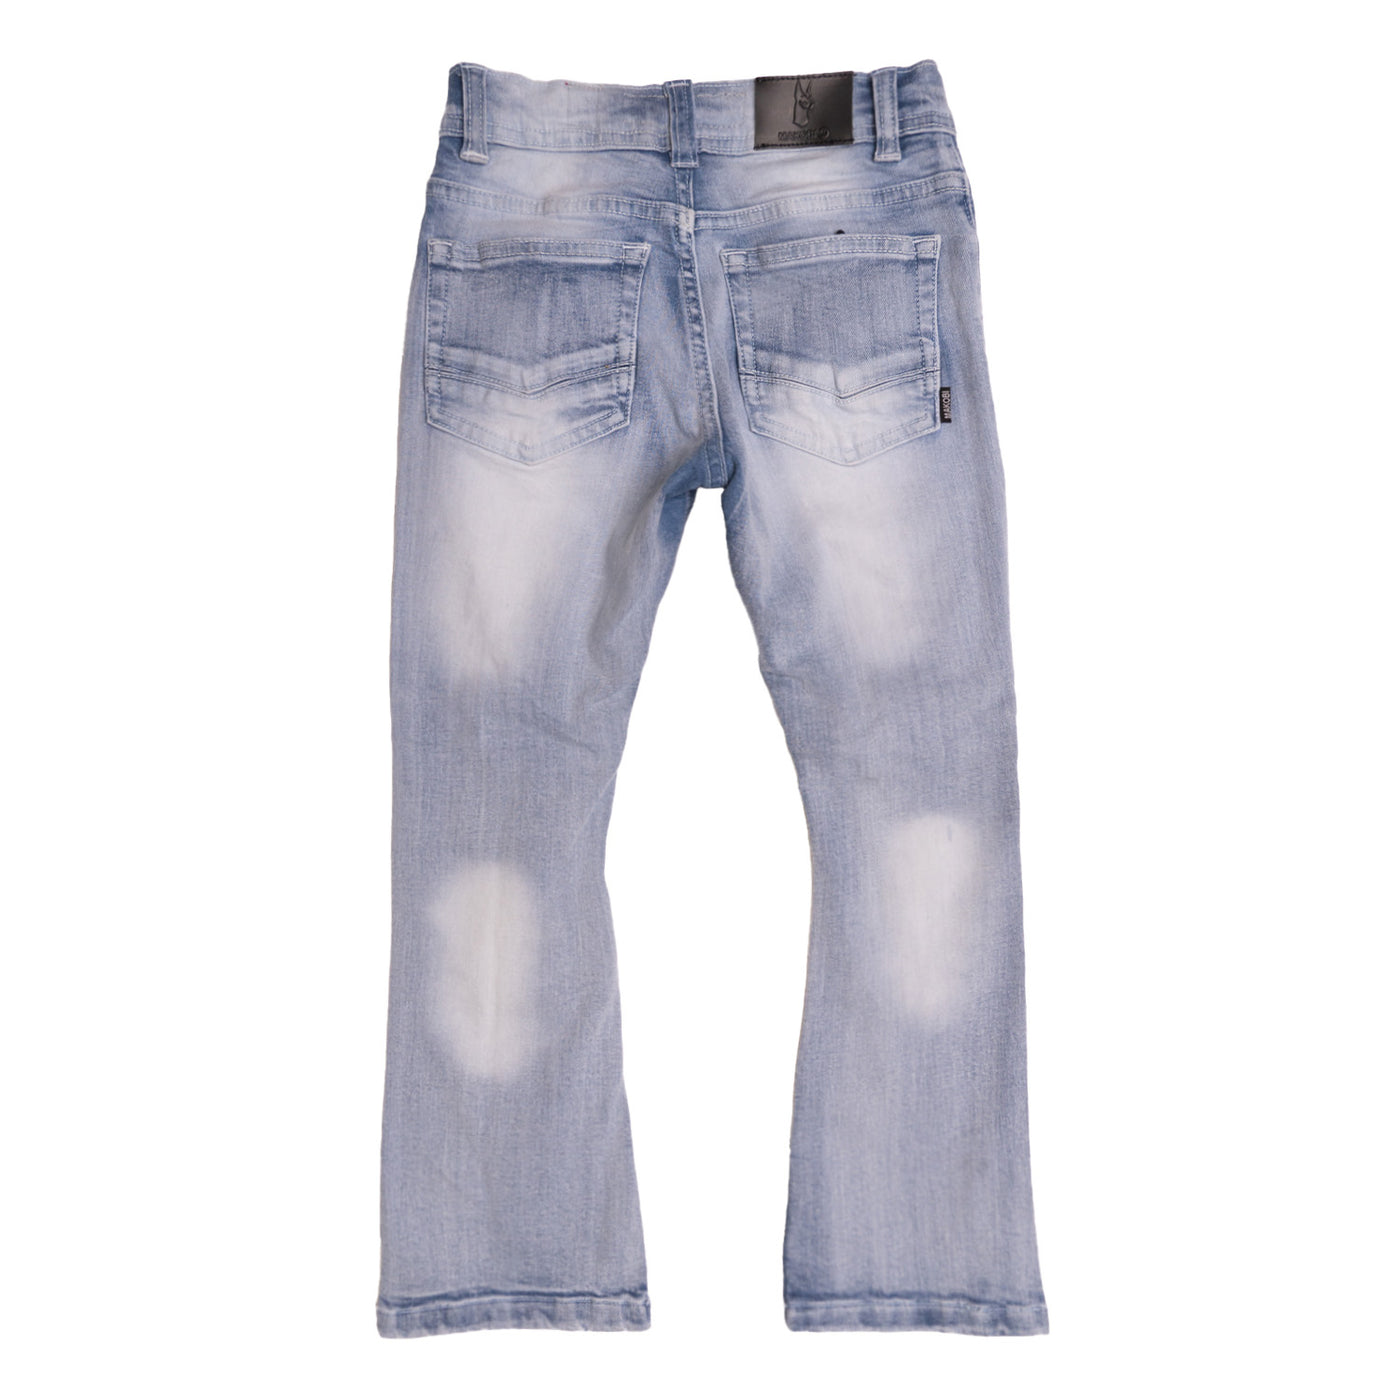 B1903 Montego Kids Jeans w/ Underlay - Light Wash